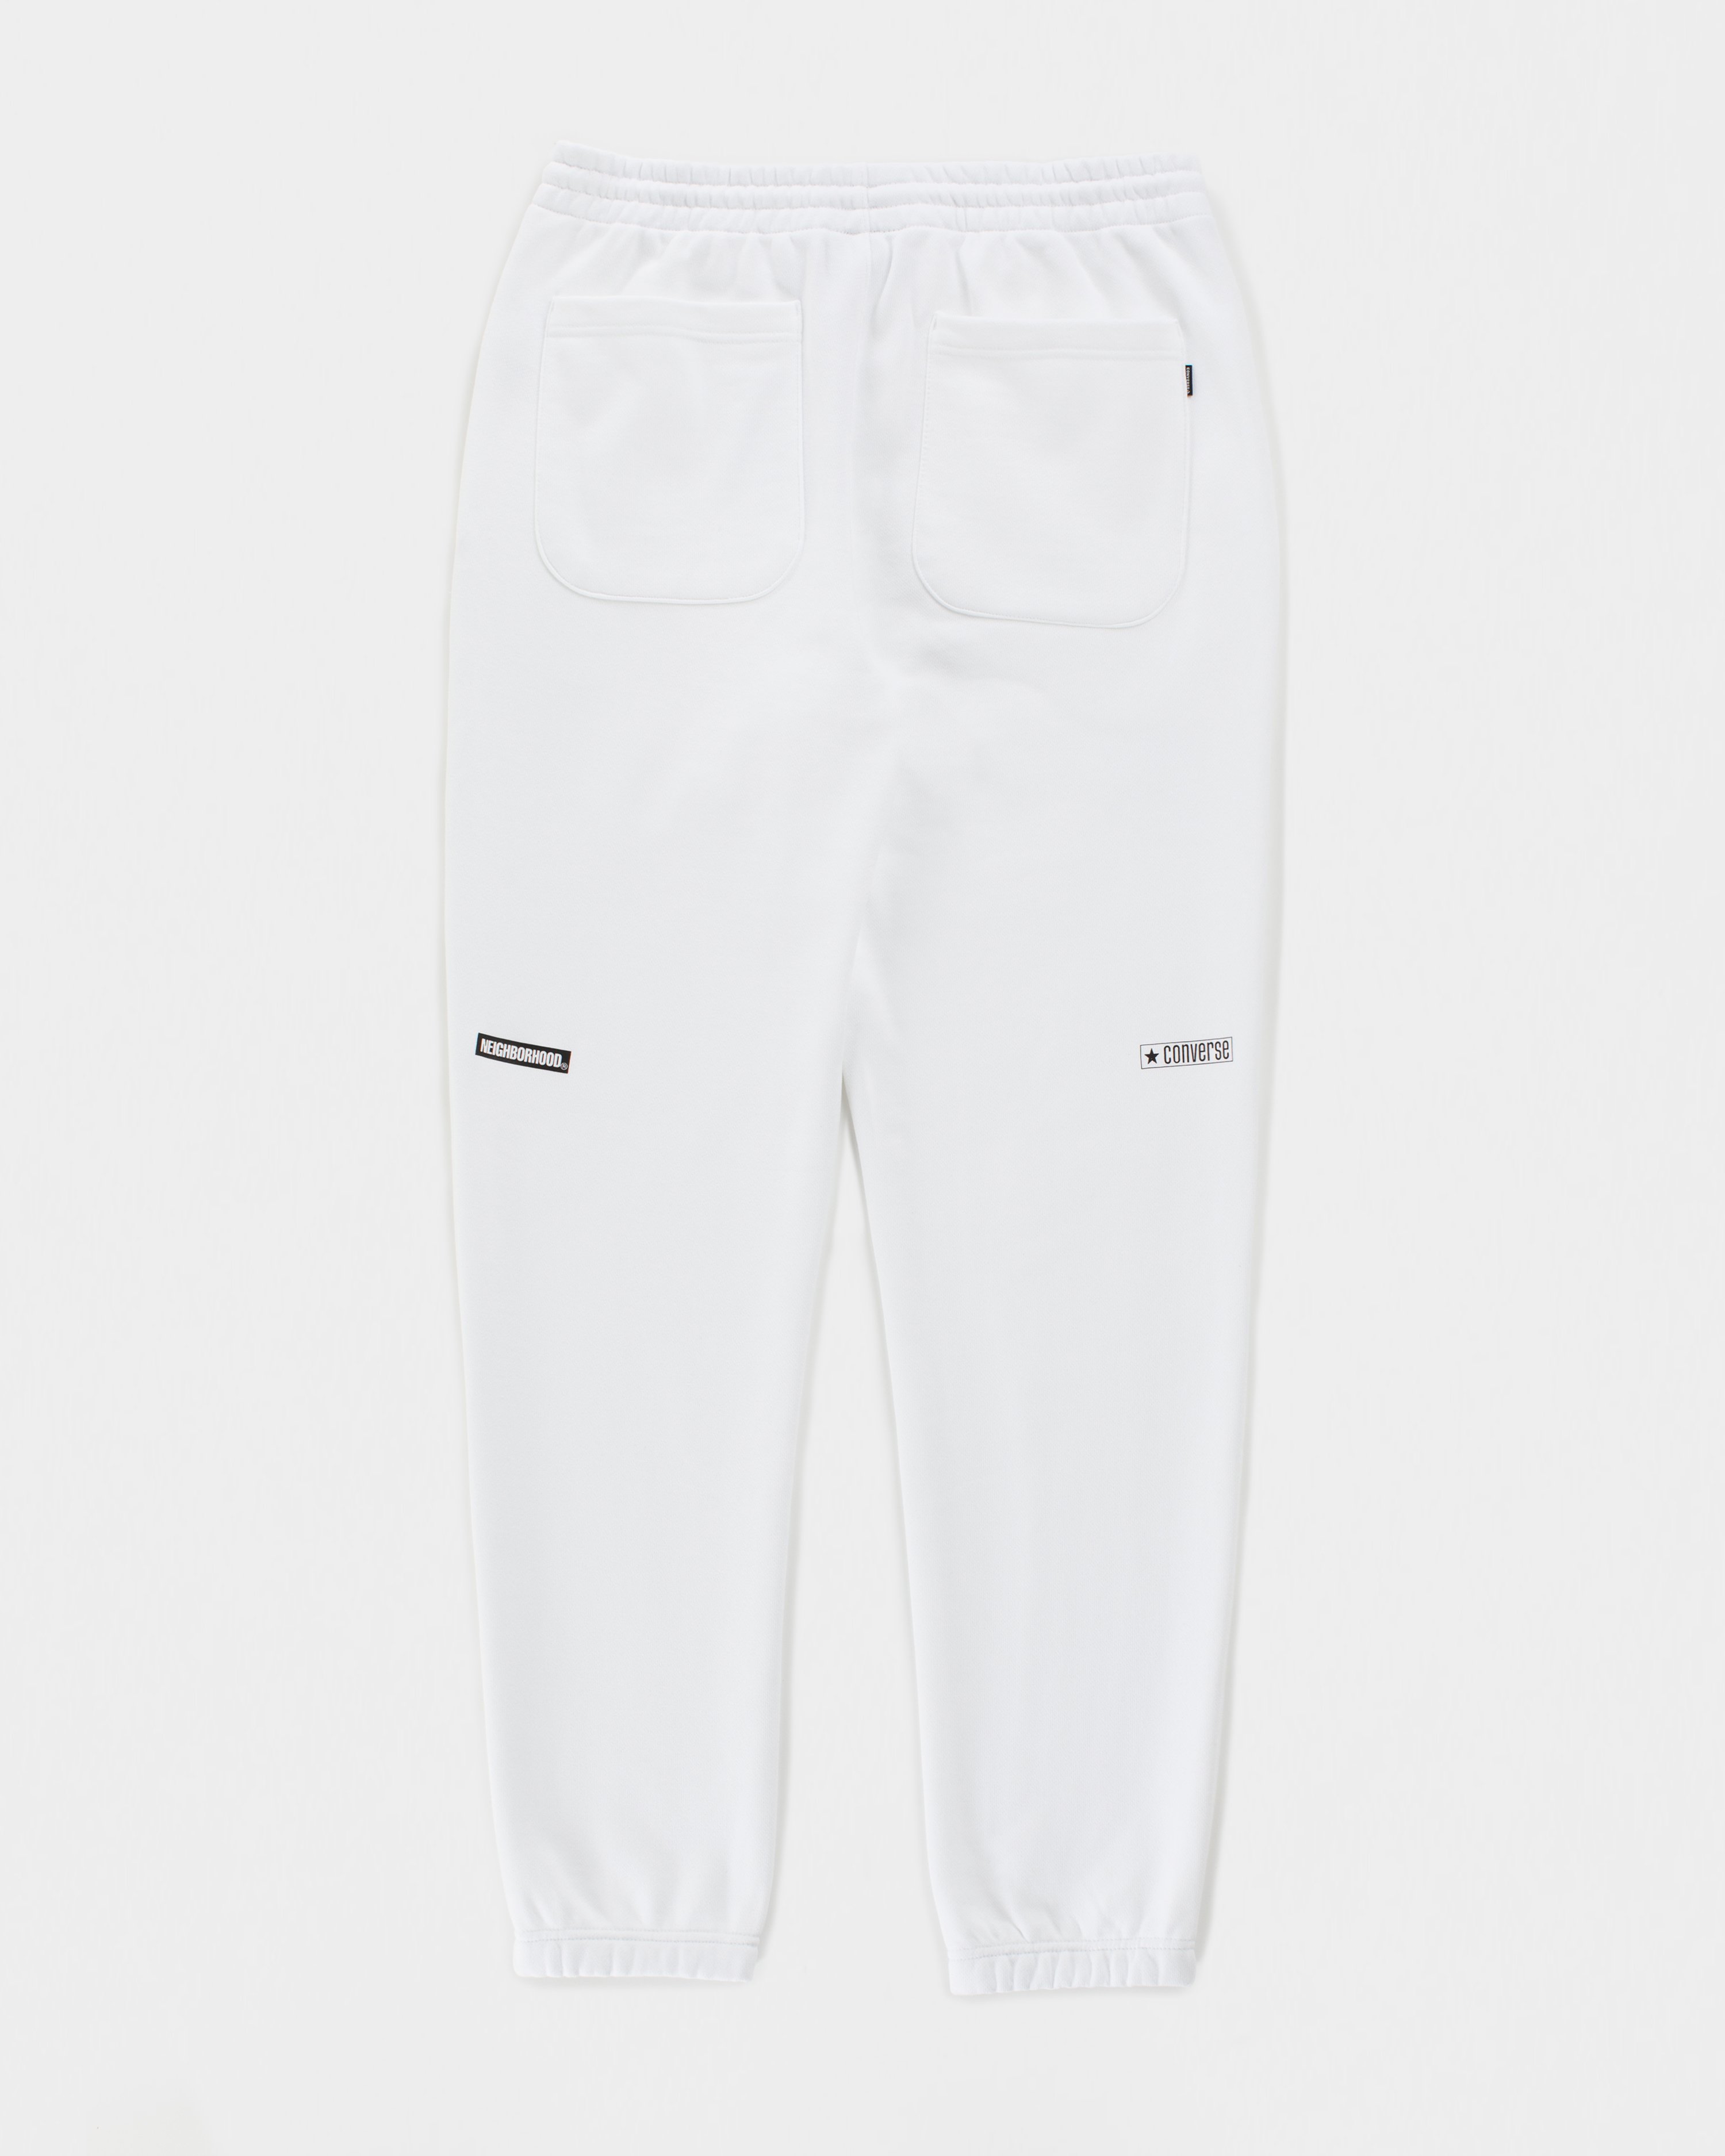 Converse x NBHD - White Sweatpants - Clothing - White - Image 2